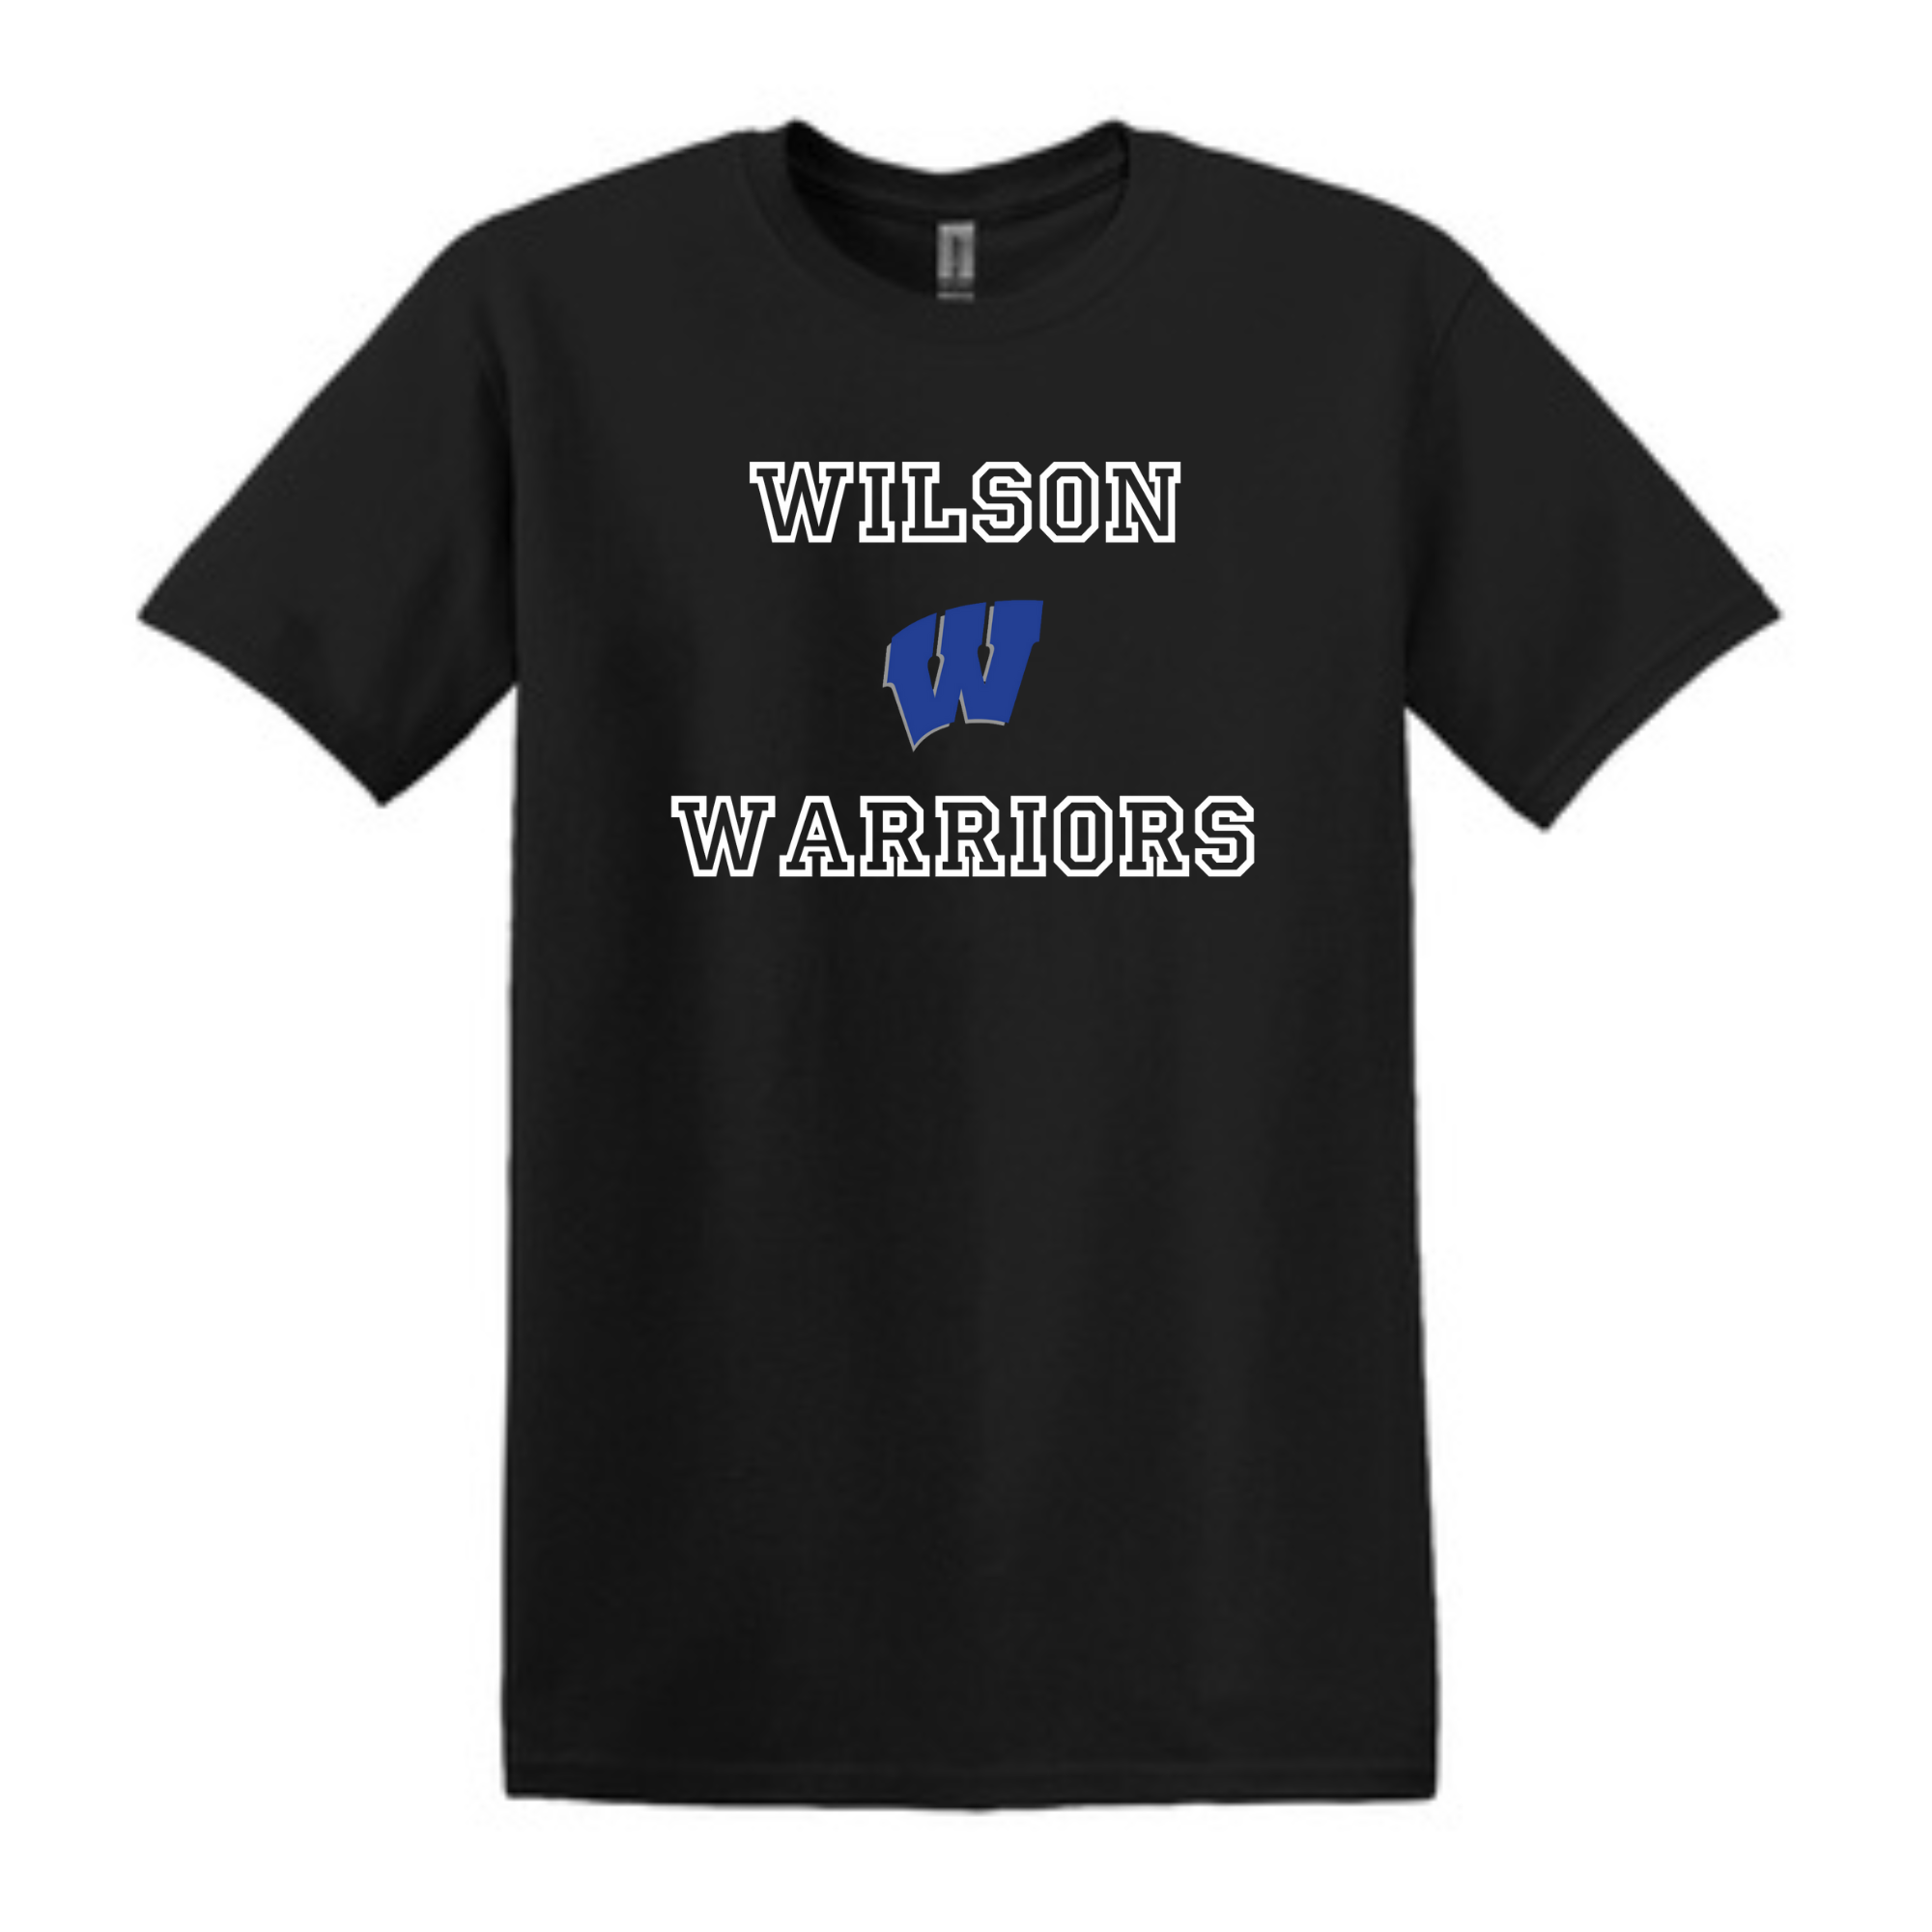 Wilson Warriors with W Tee- 64000 Black